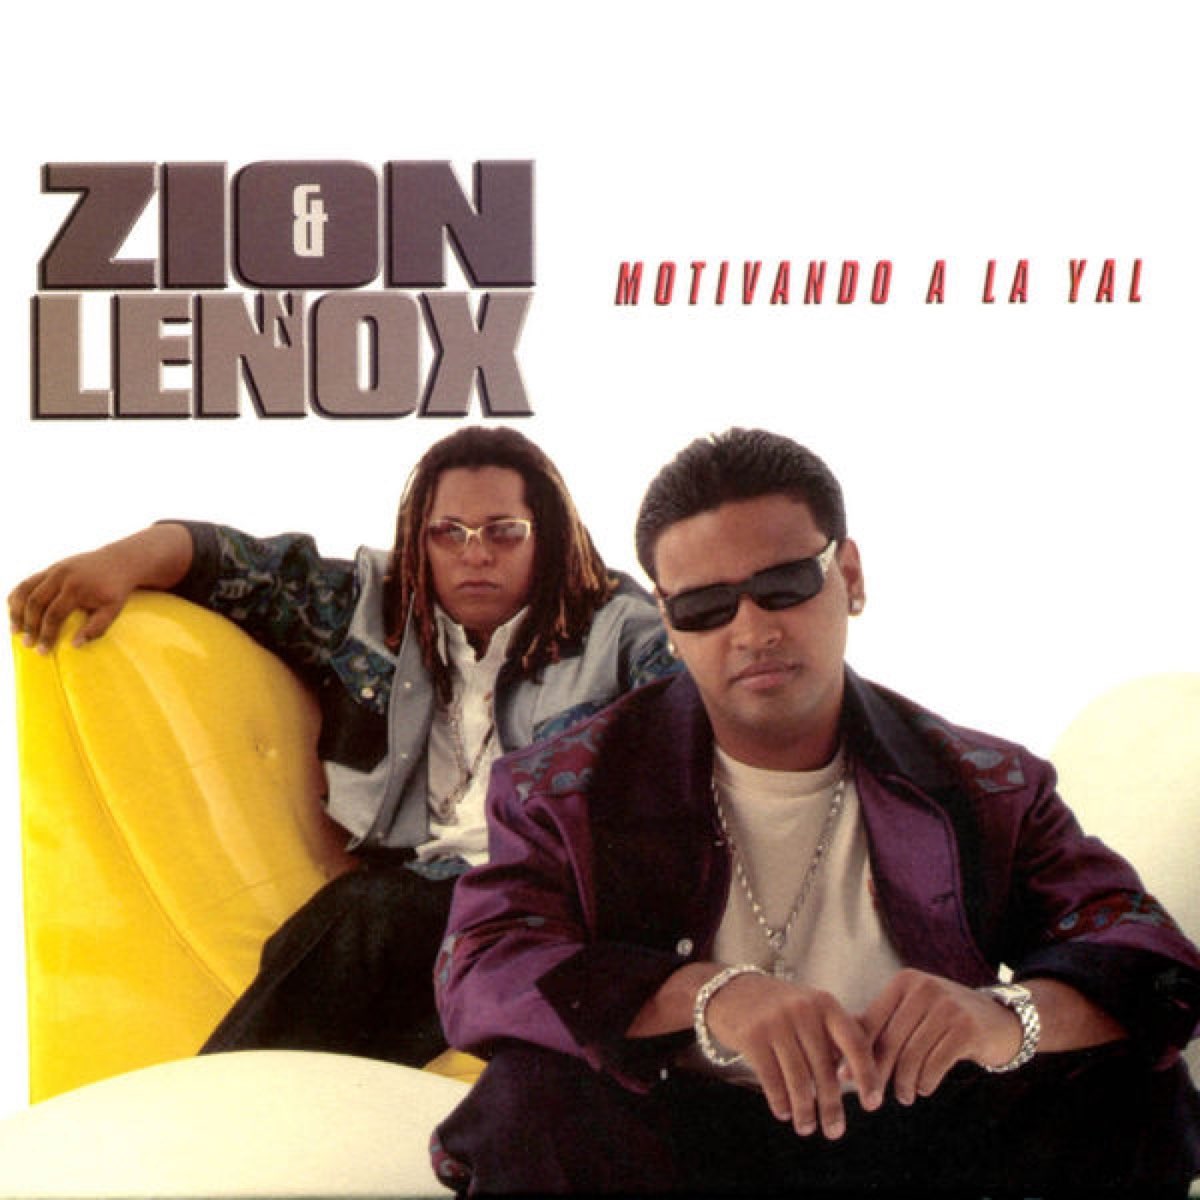 Daddy yankee yo voy. Zion & Lennox. Motivando a la Yal Zion y Lennox. Zion y Lennox песни. Lennox певец латиноамериканский.